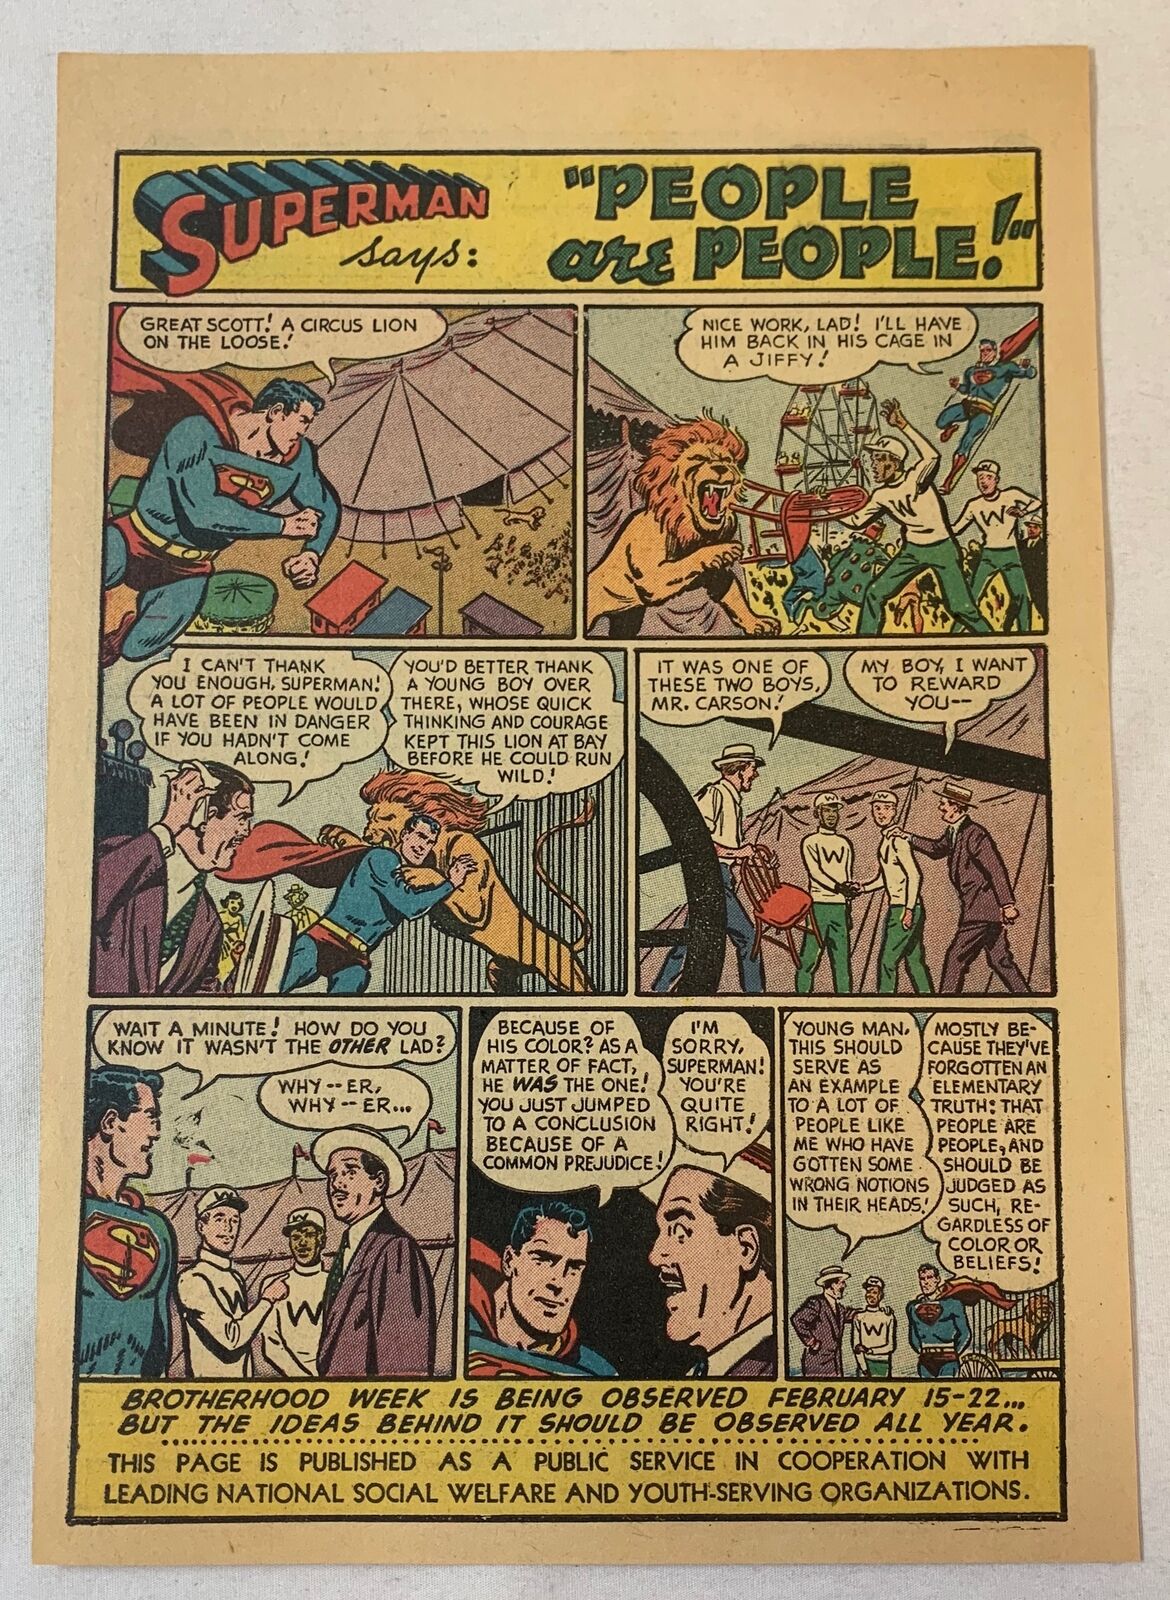 1953 SUPERMAN cartoon PSA ad page ~ Defeat Racism